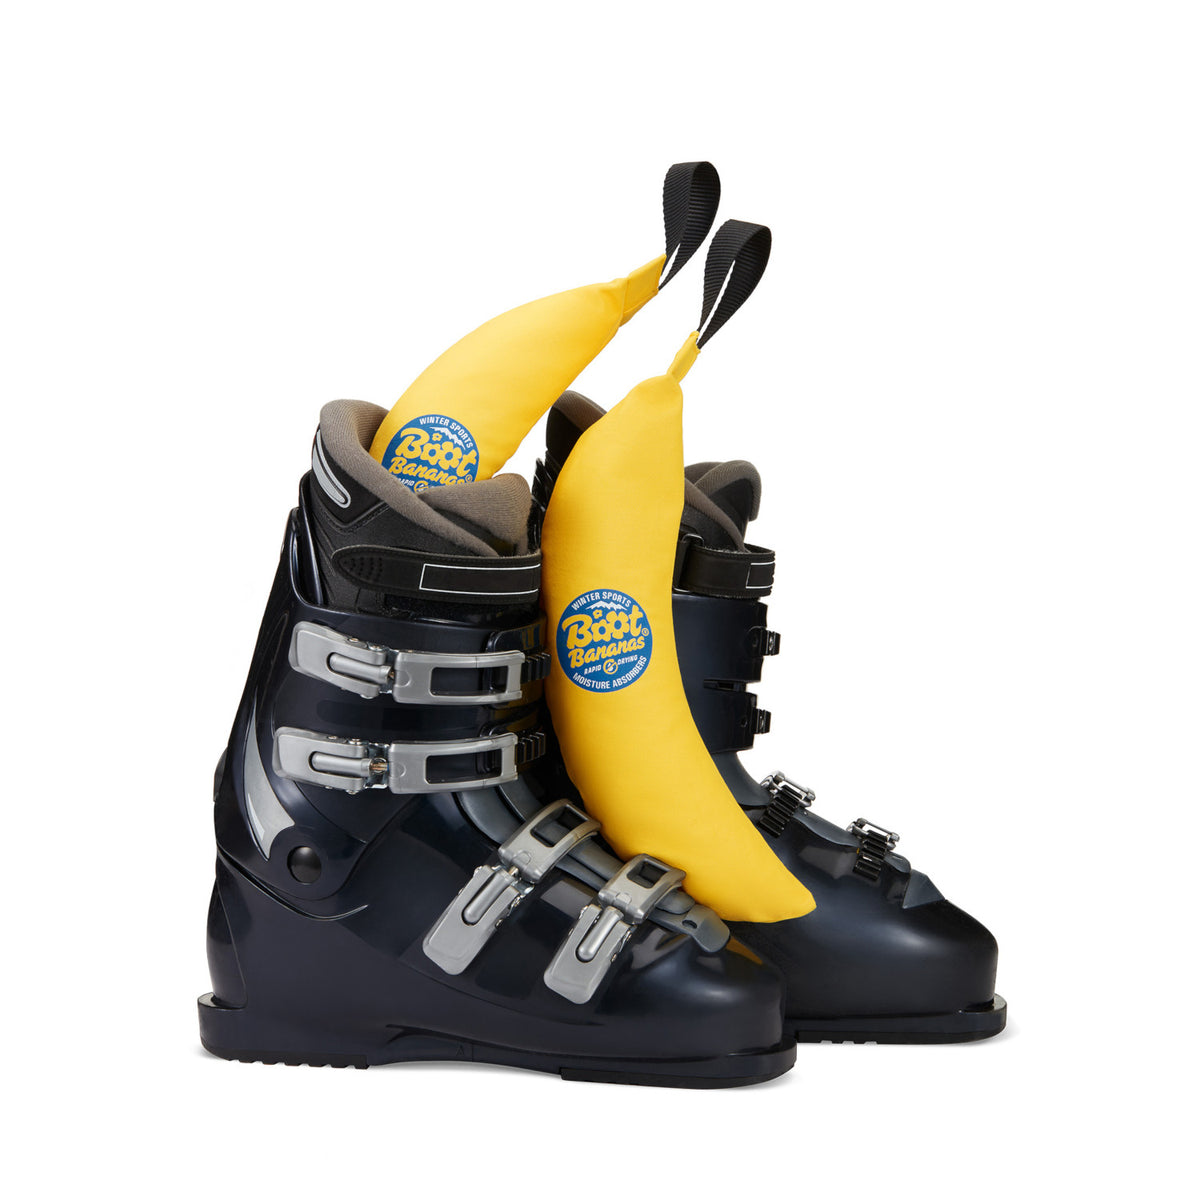 Boot Bananas Winter Sports